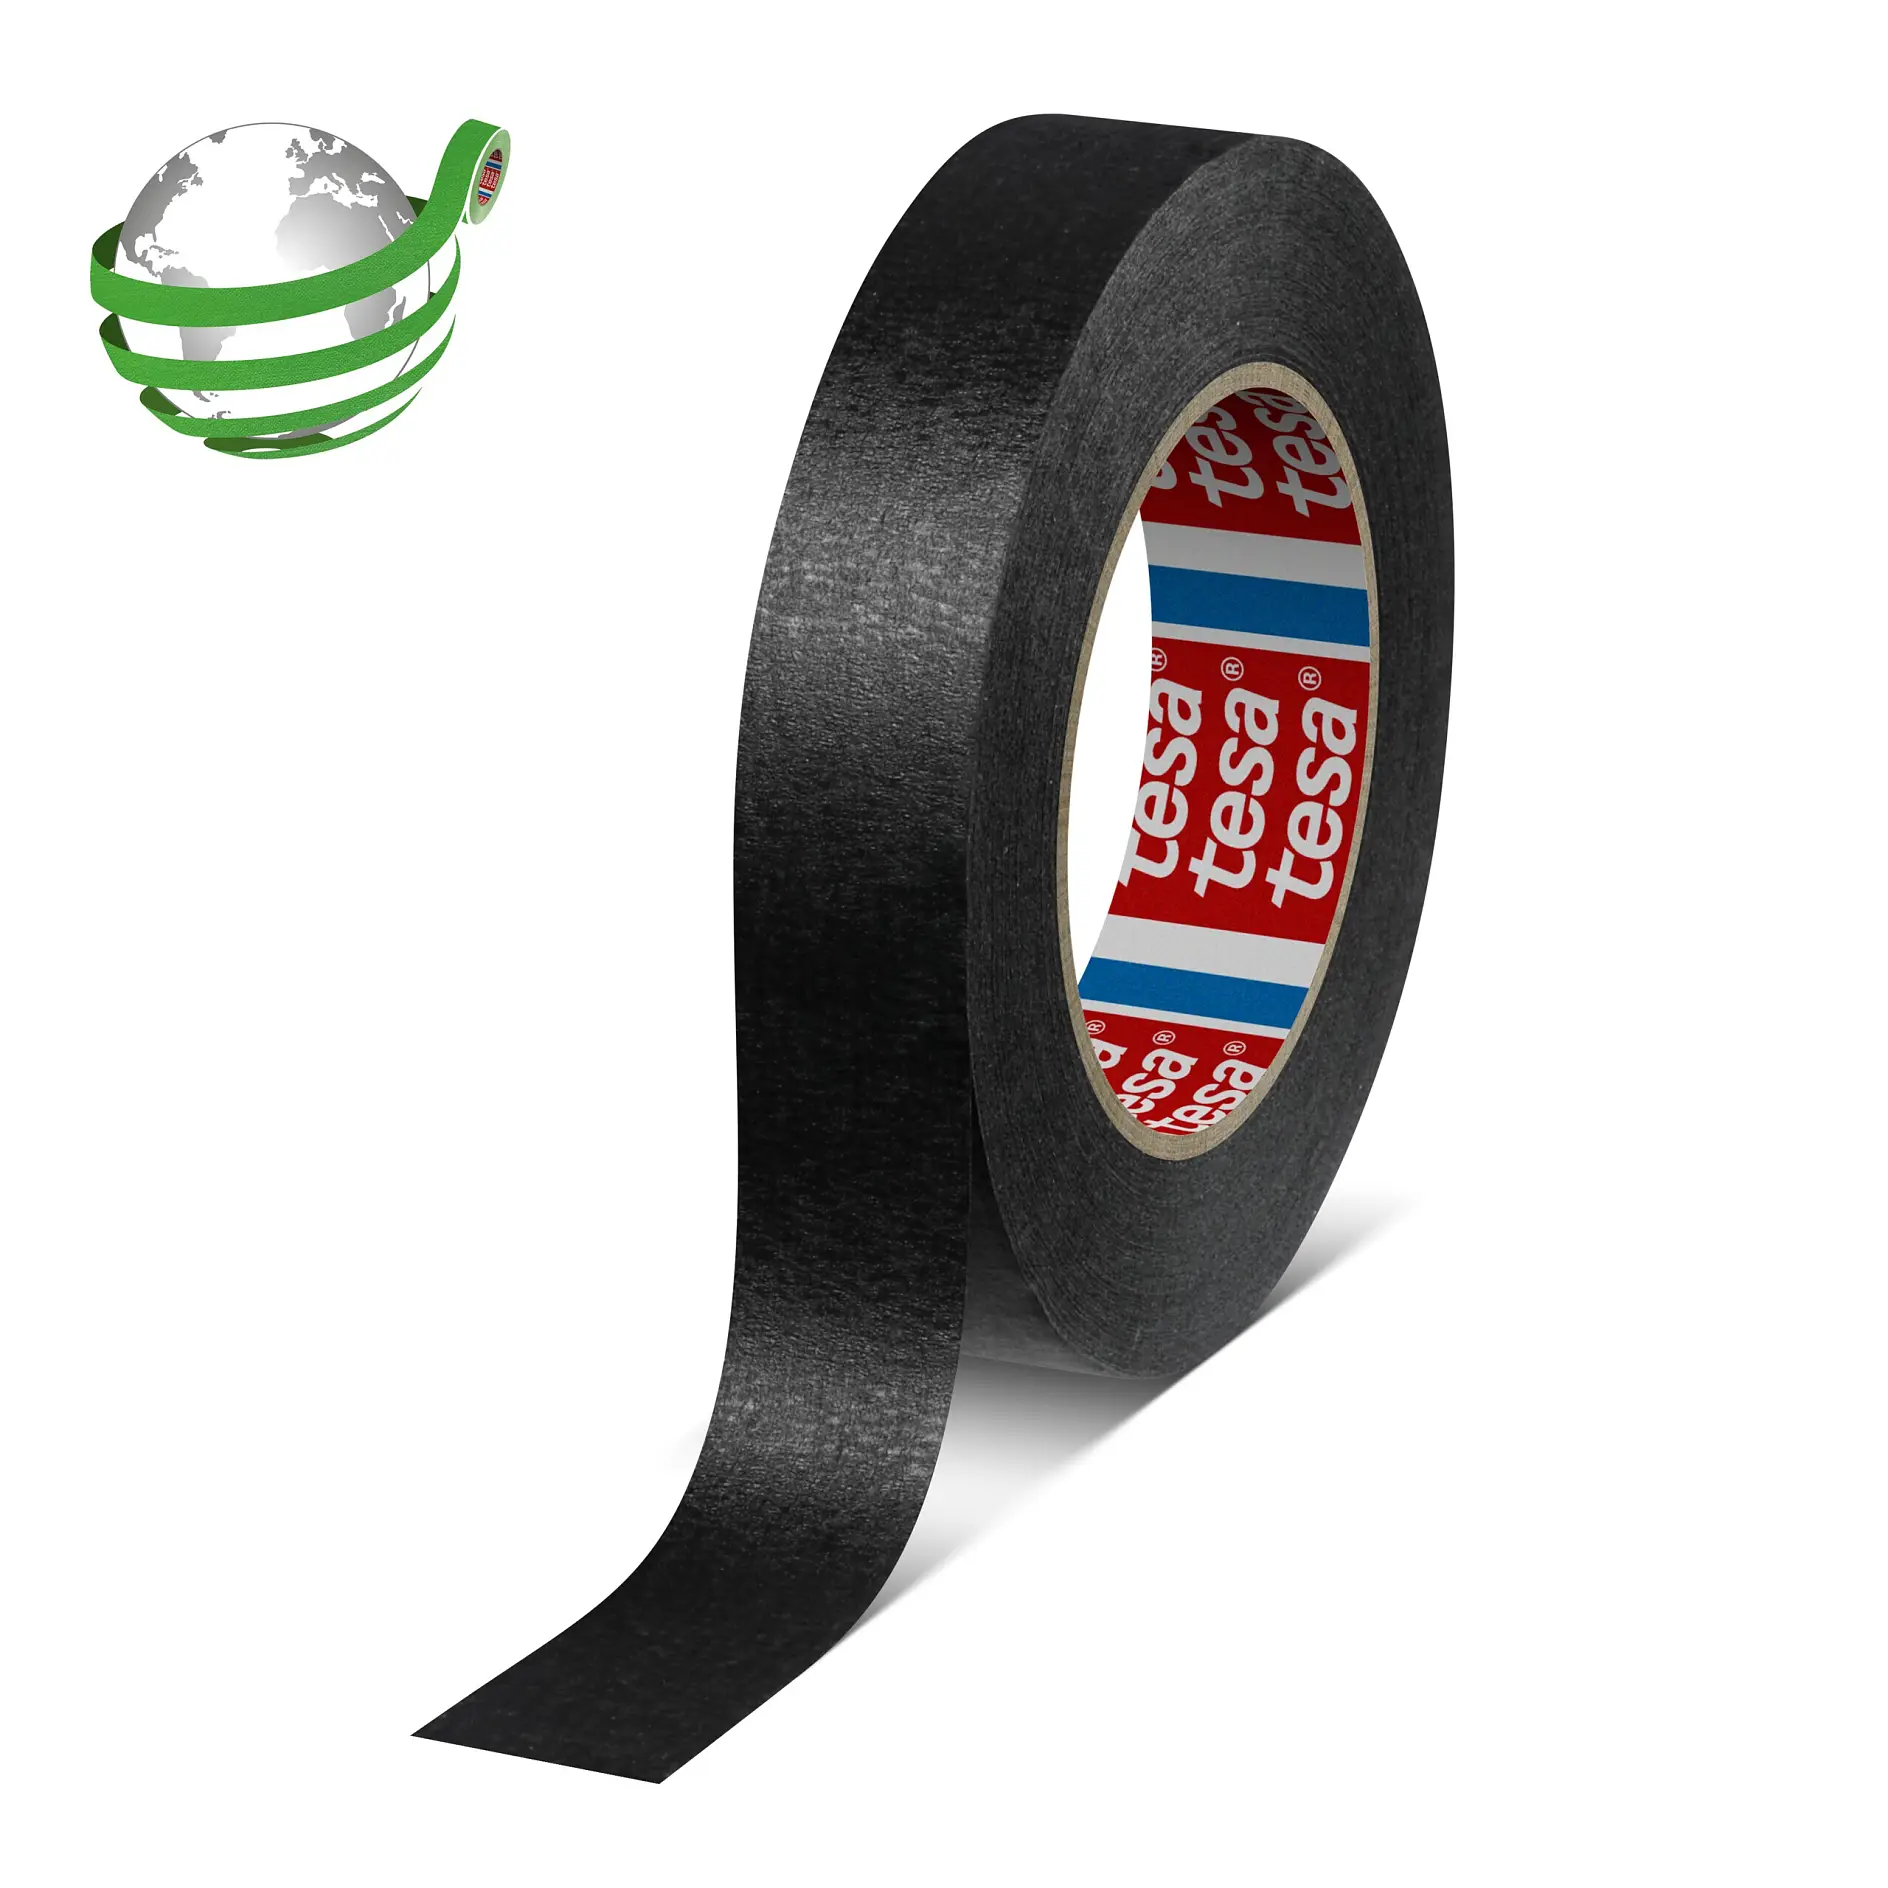 tesa-4328-quality-general-purpose-paper-masking-tape-black-043280000800-pr-with-marker